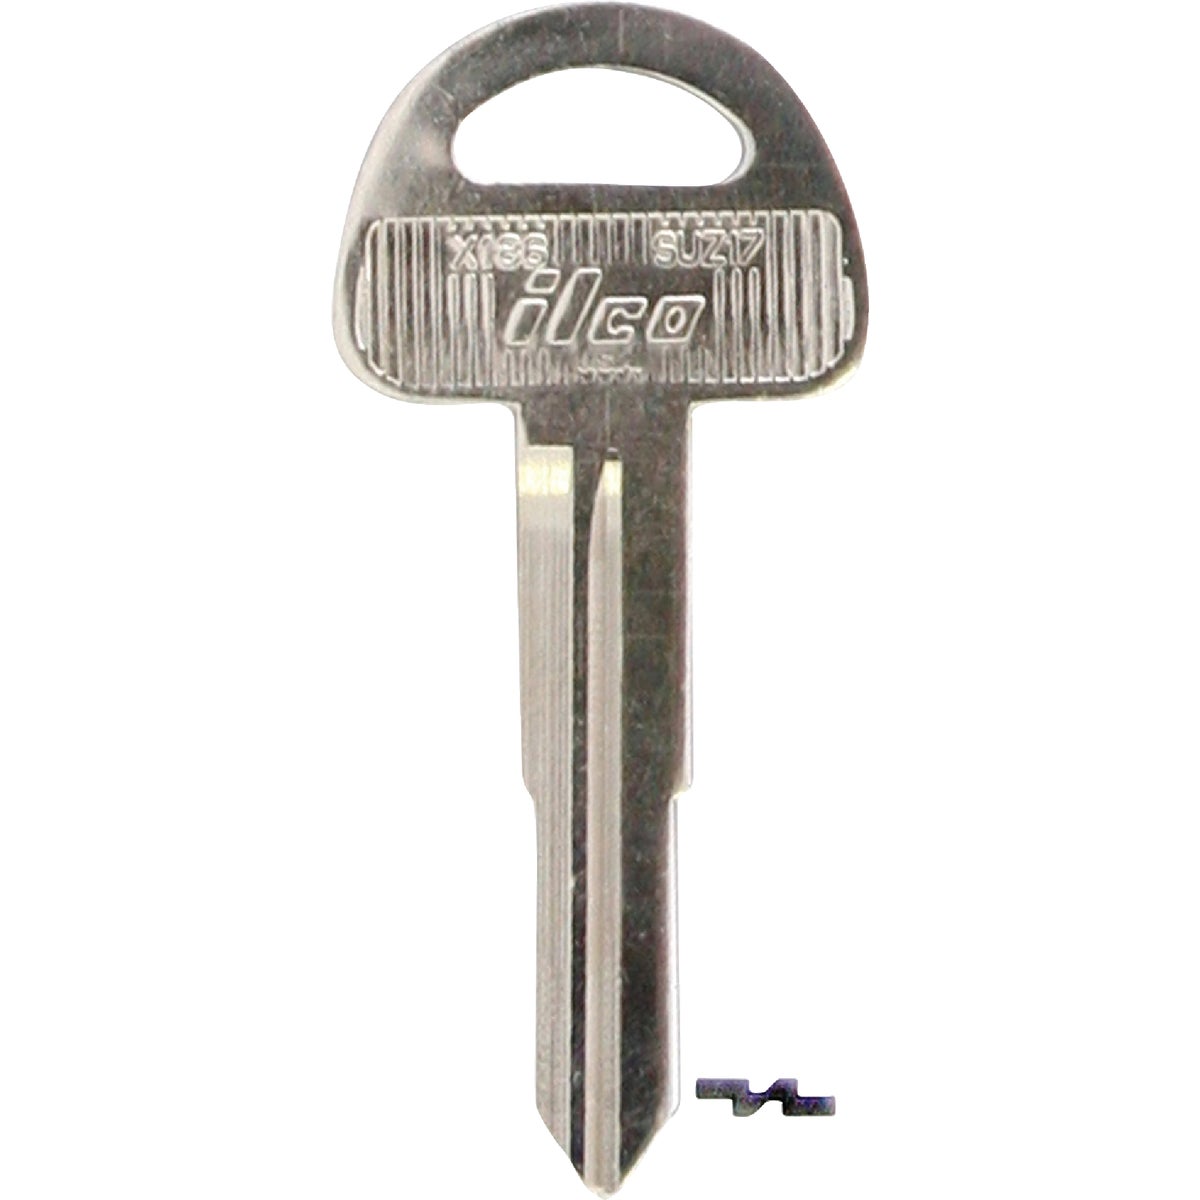 ILCO Suzuki Nickel Plated Automotive Key, SUZ17 / X186 (10-Pack)